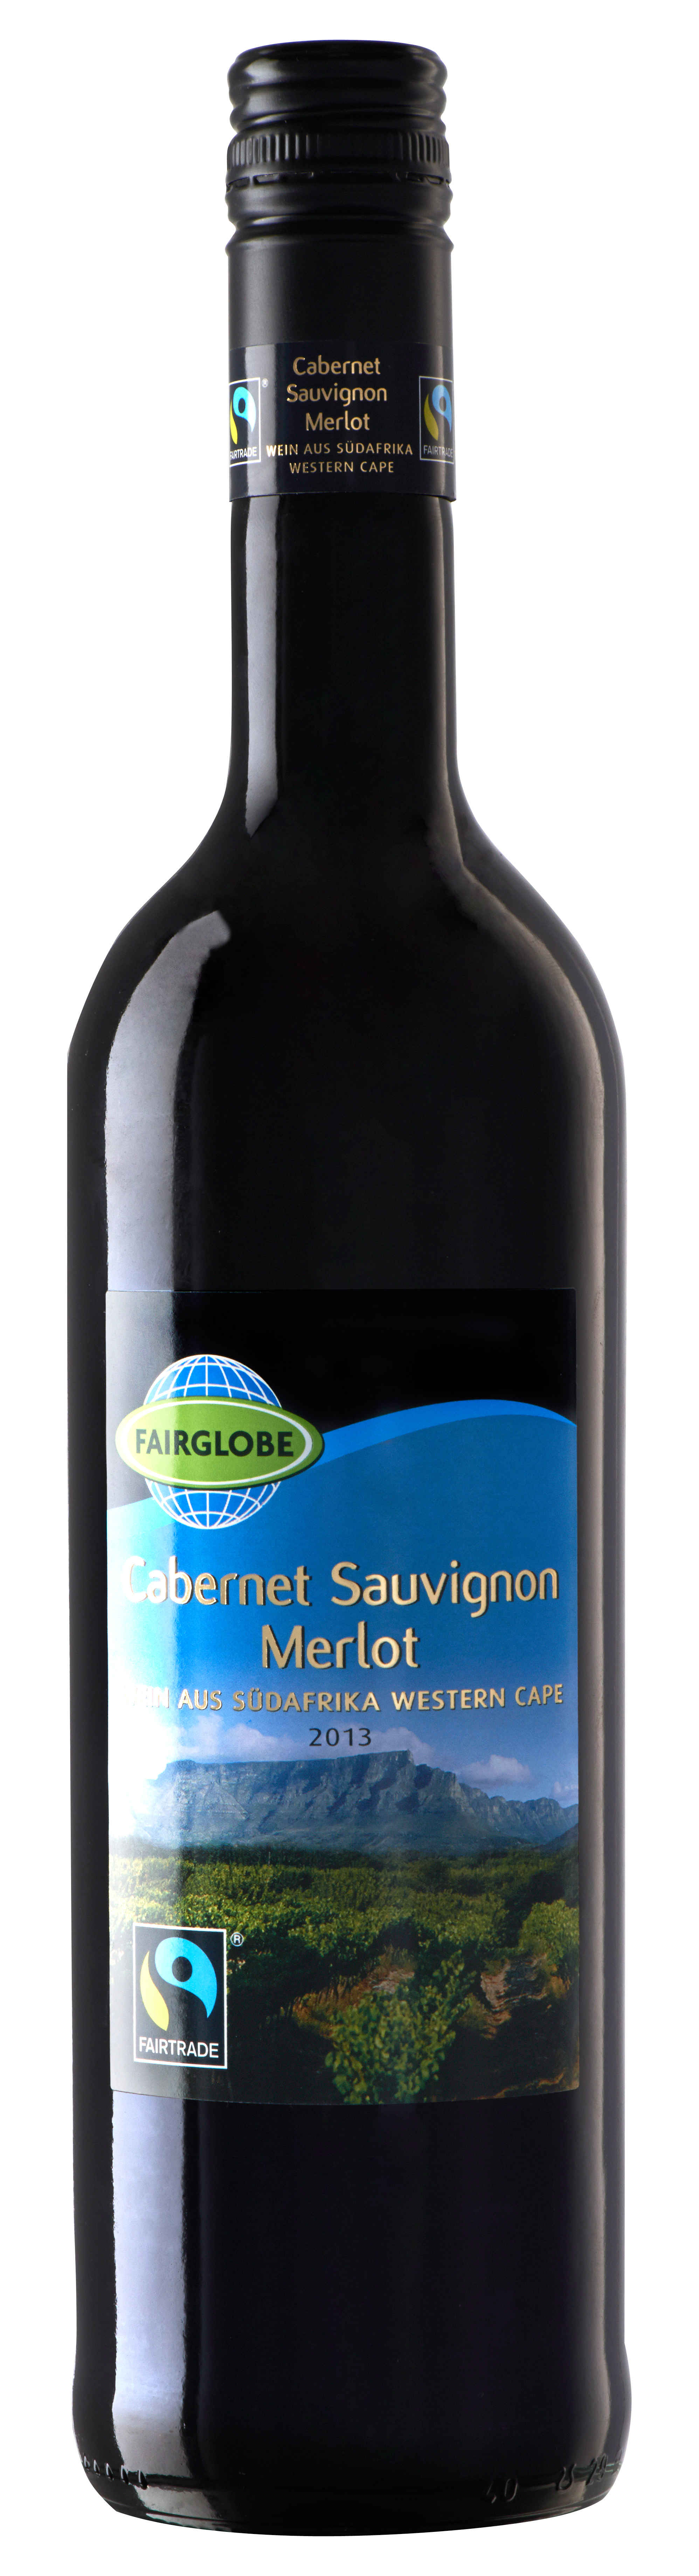 Fairglobe Cabernet Sauvignon Merlot-